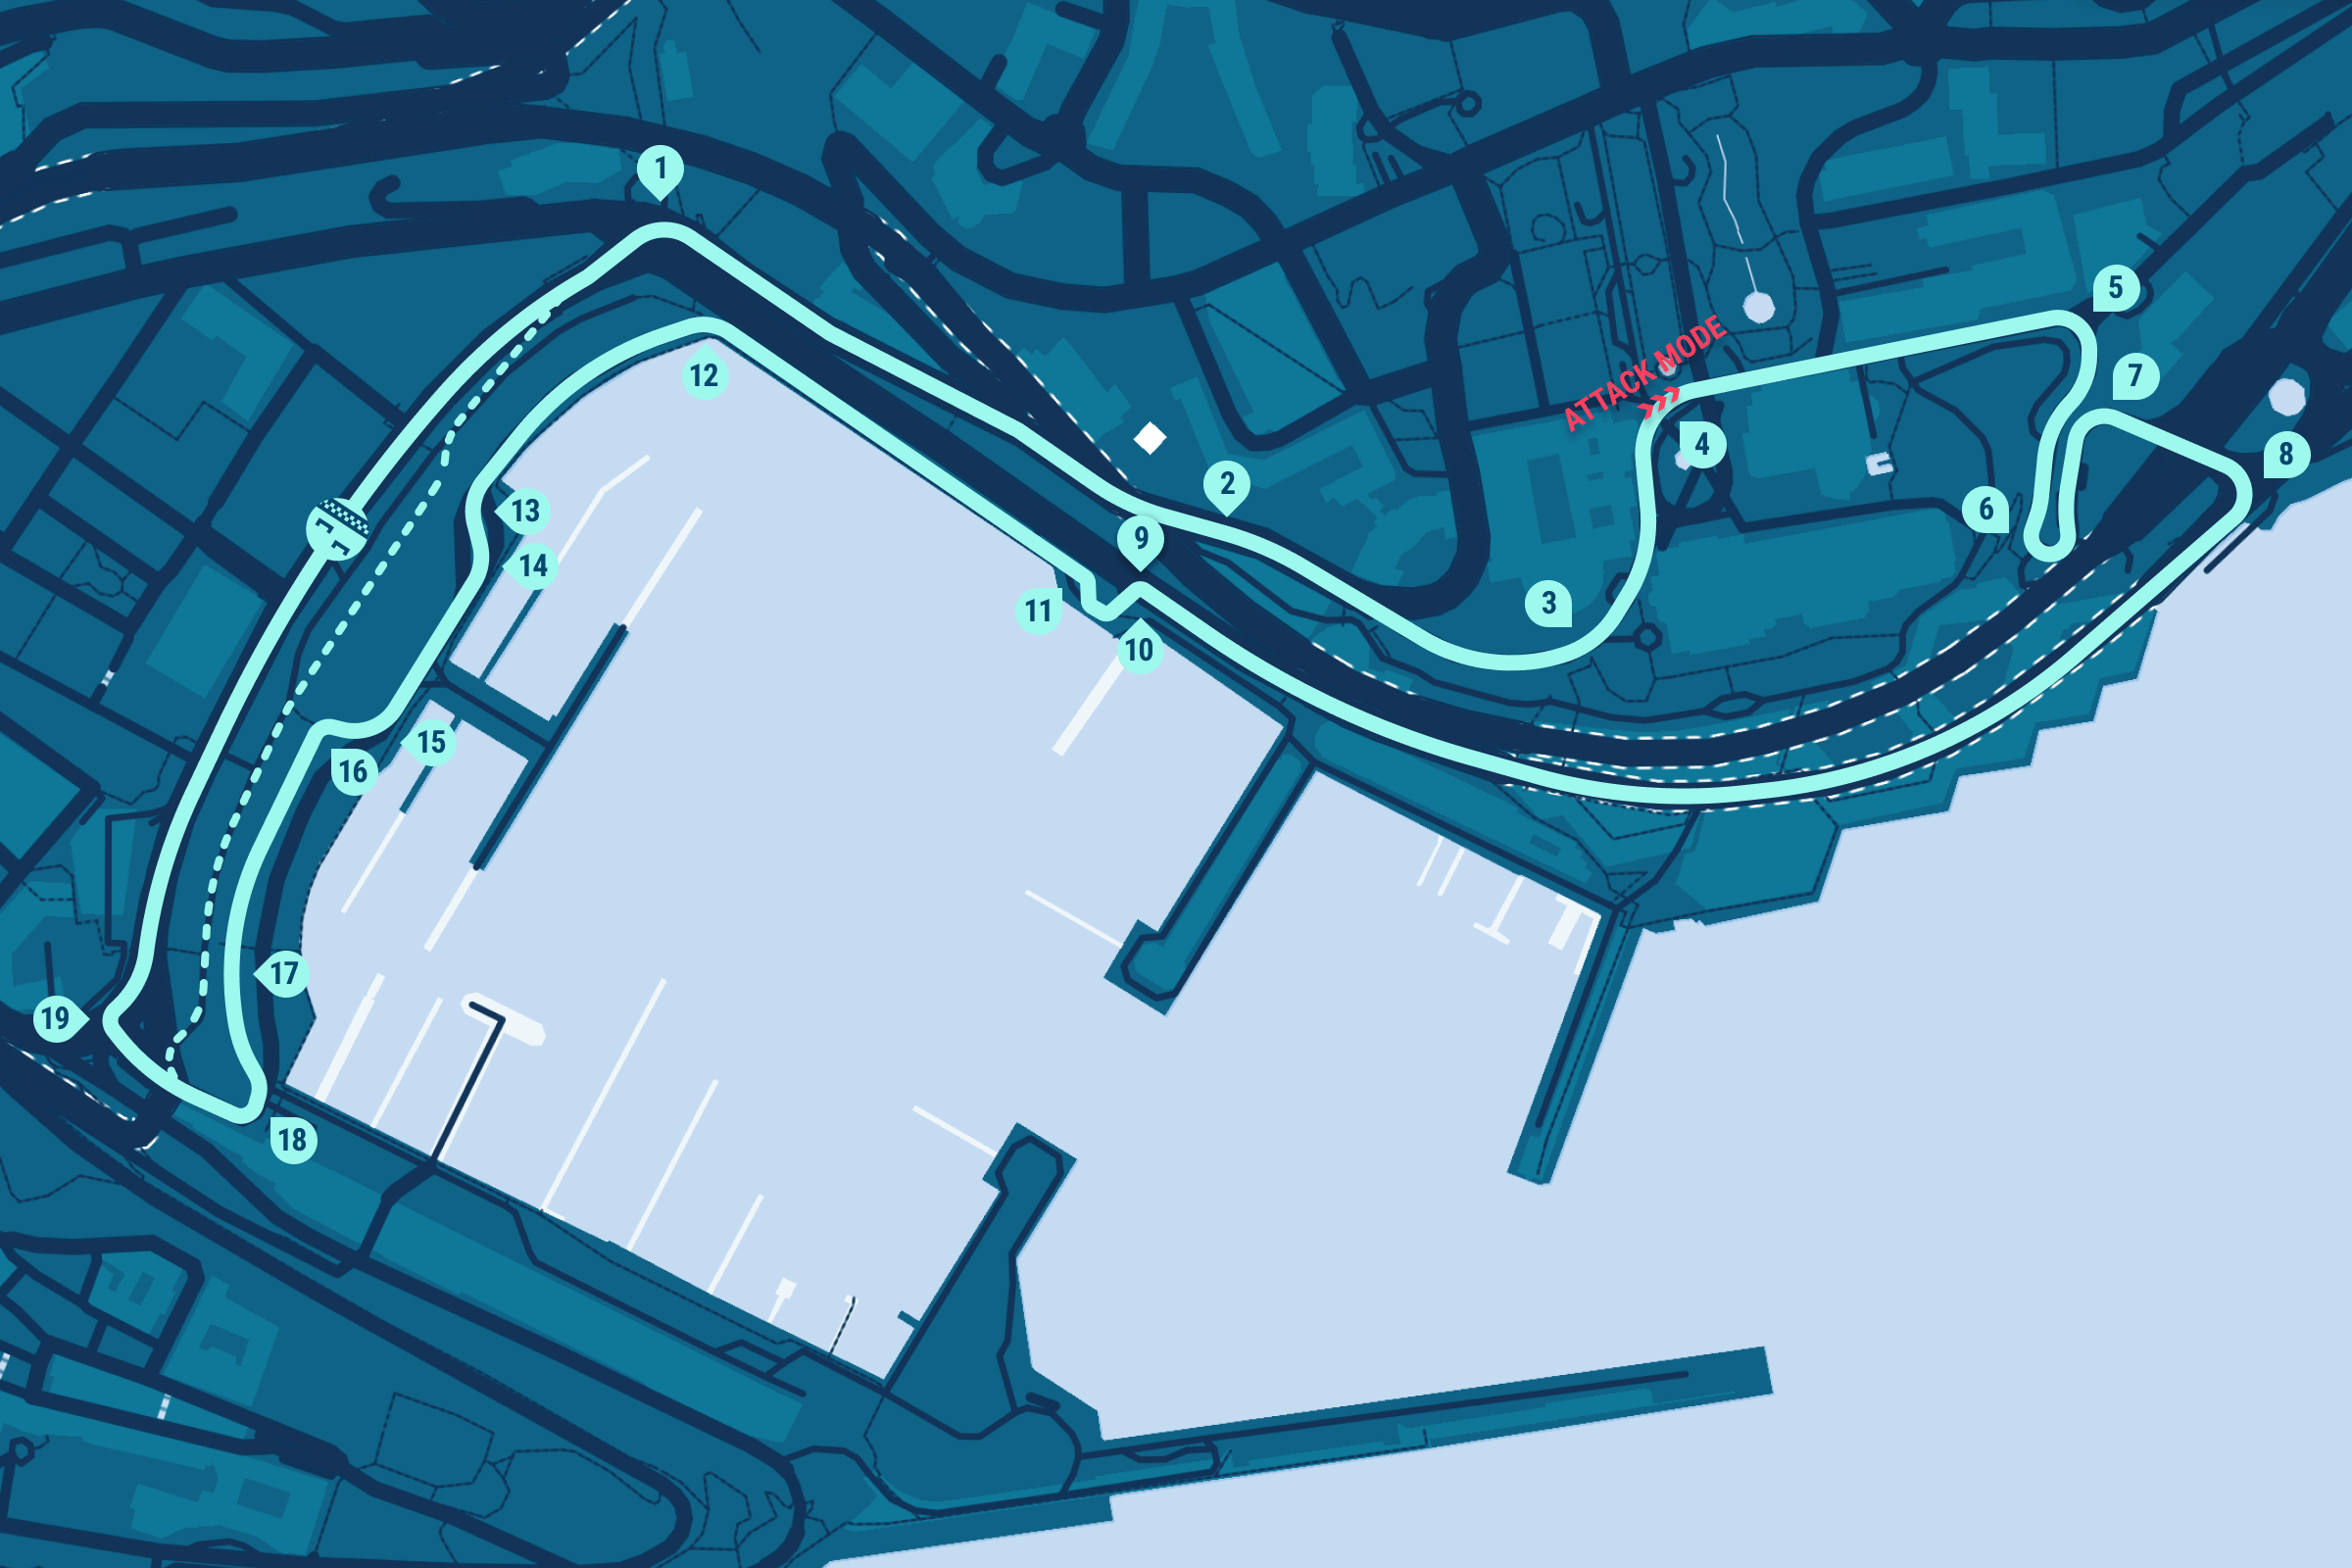 Monaco Grand Prix Circuit (2021)